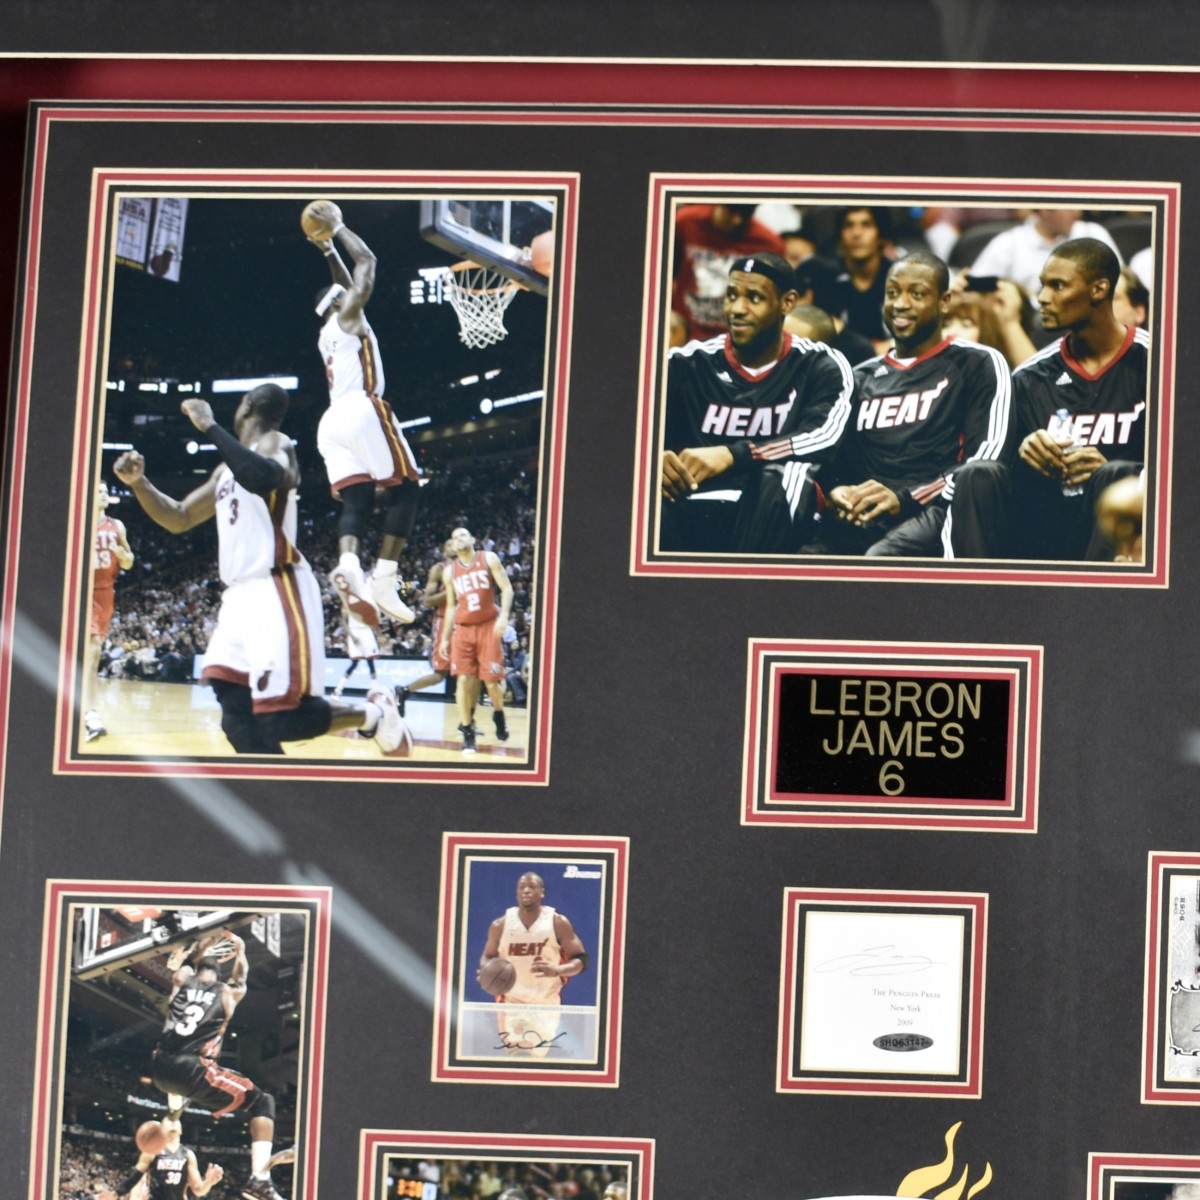 Miami Heat Autographed Sports Memorabilia